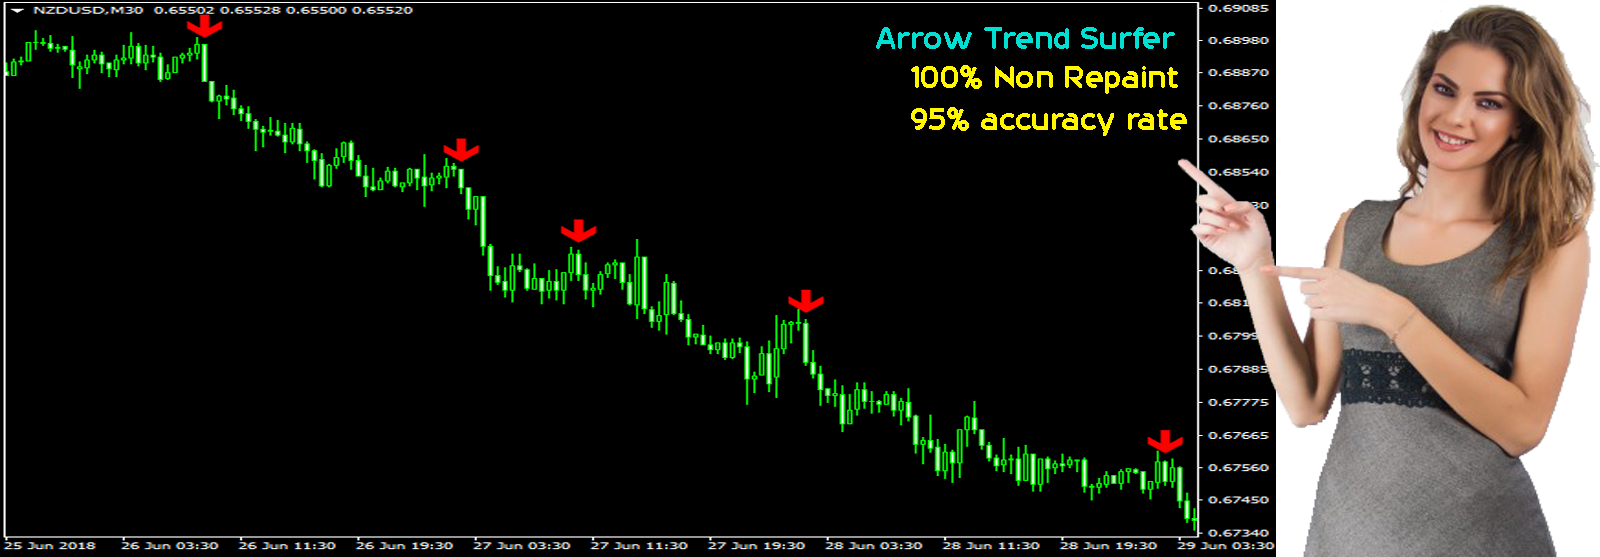 Arrow Trend Surfer Indicator